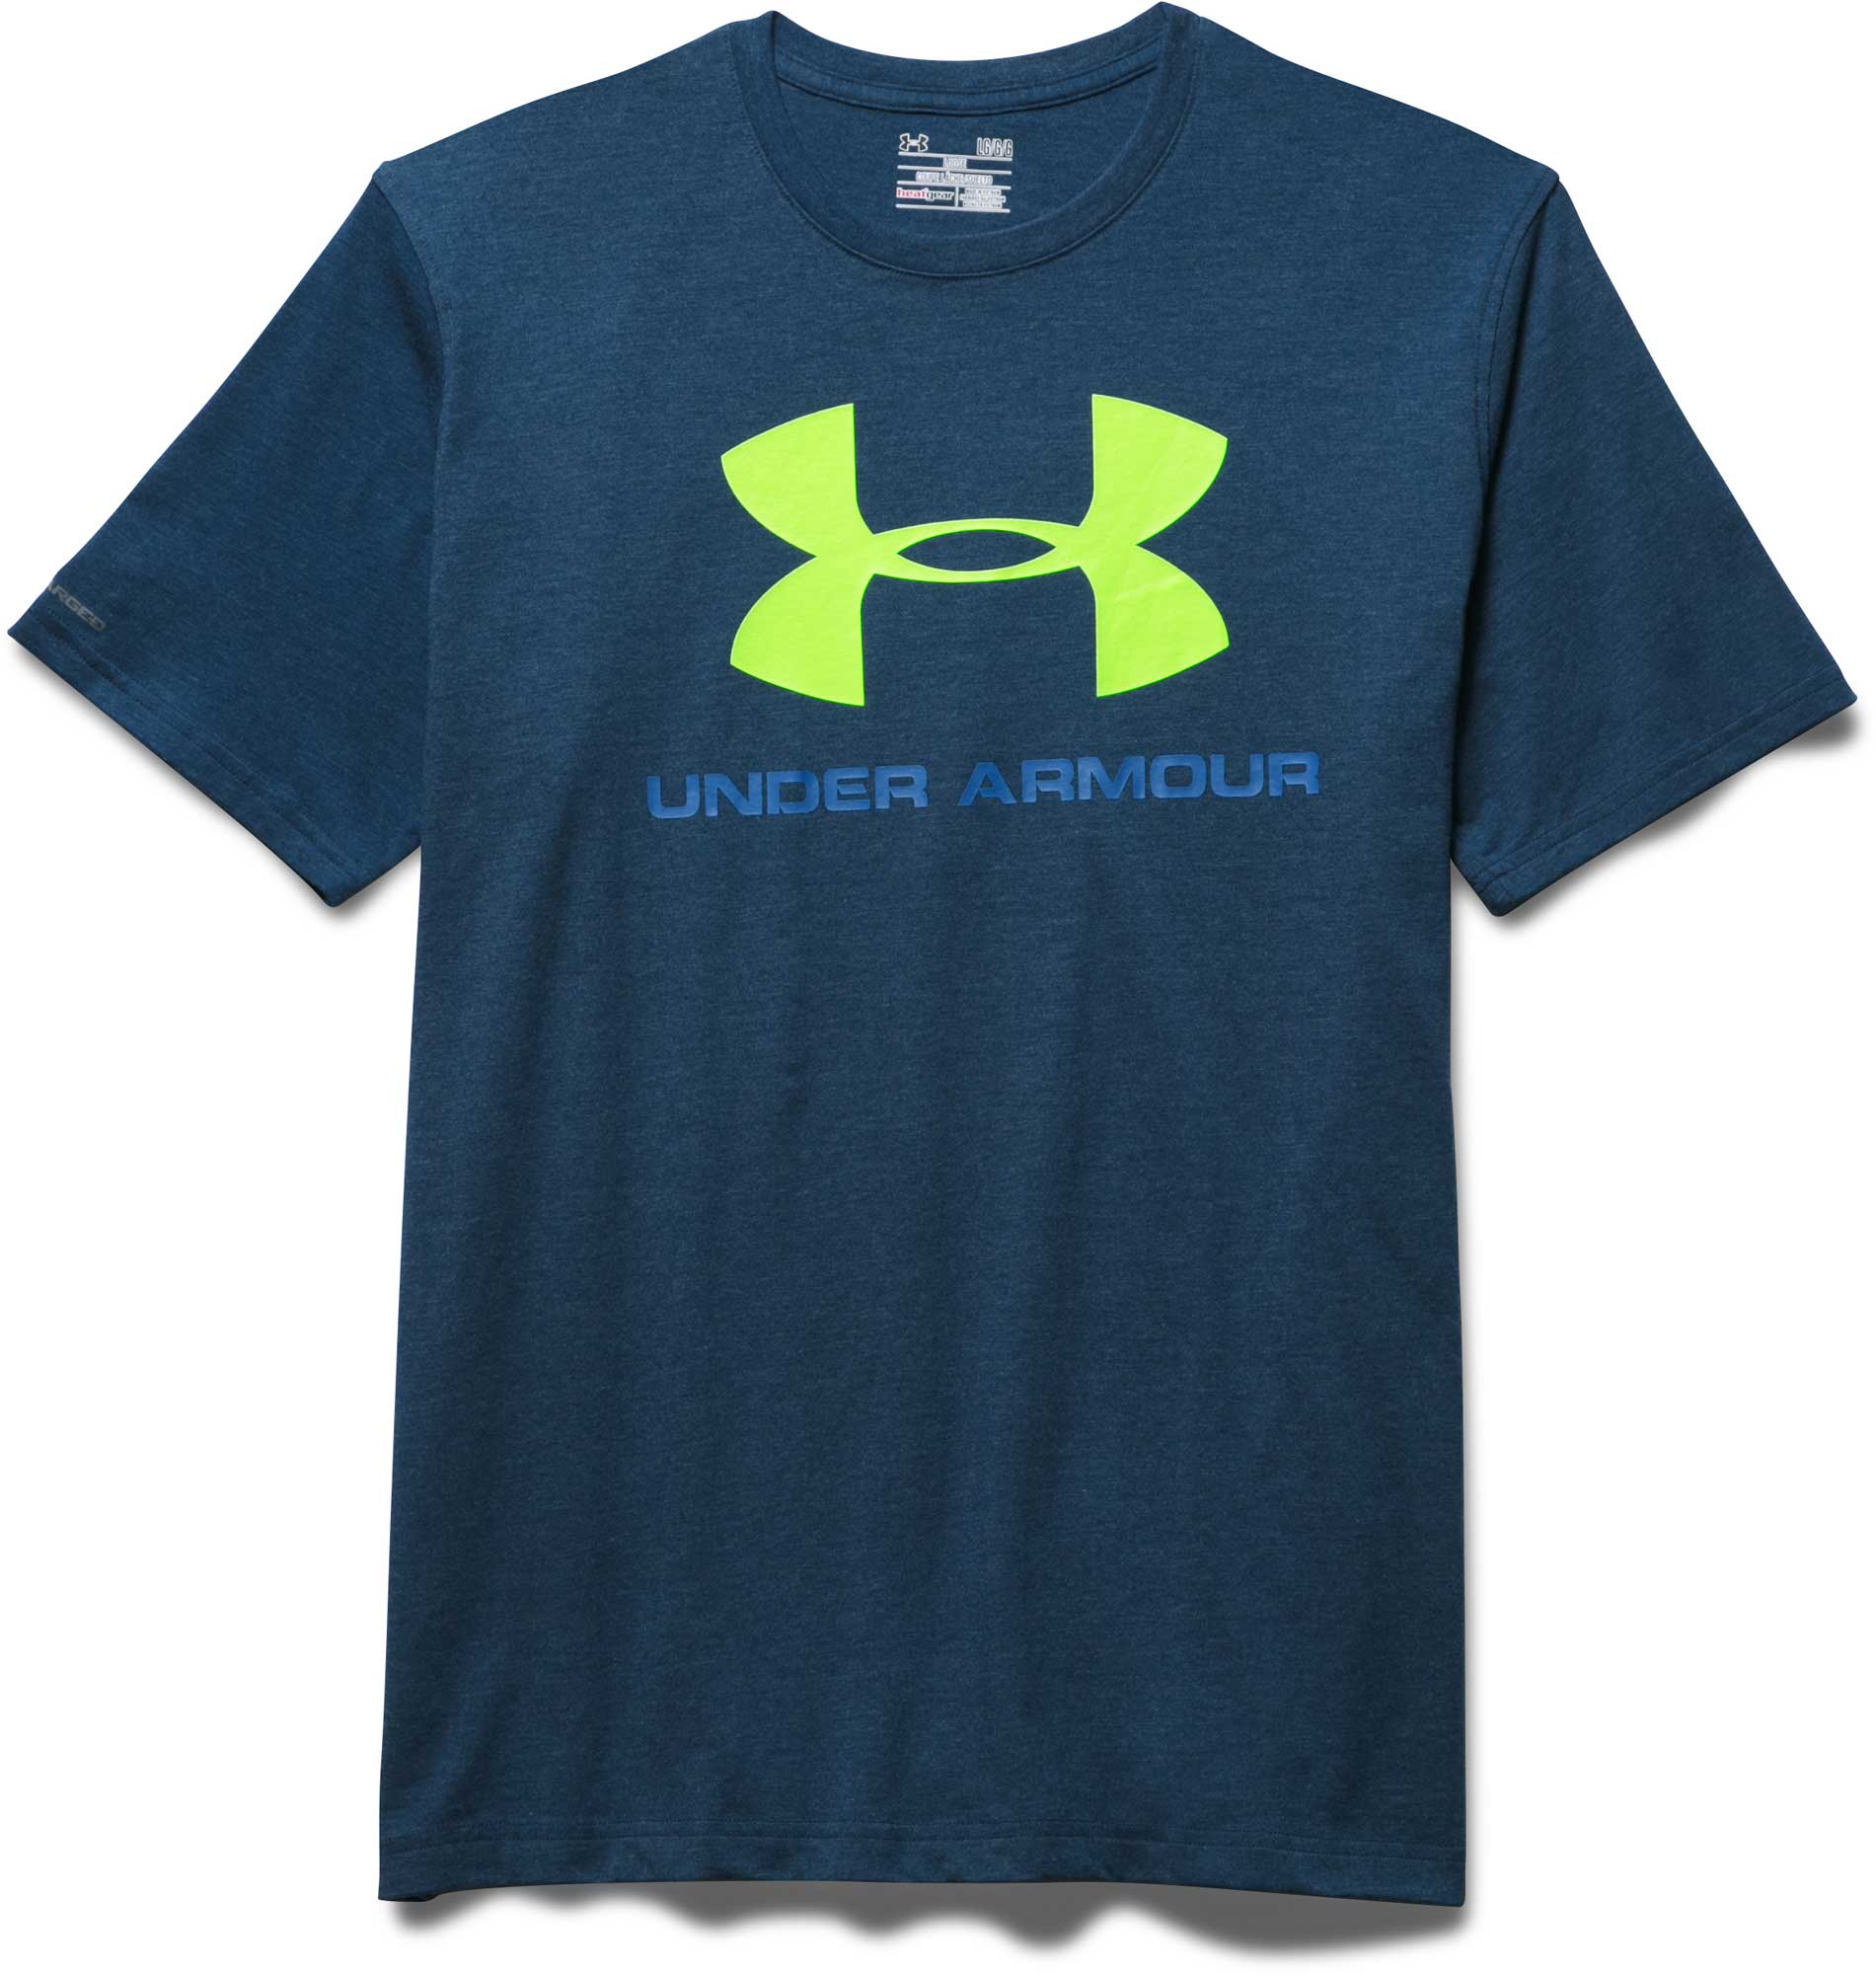 Men’s T-shirt with logo